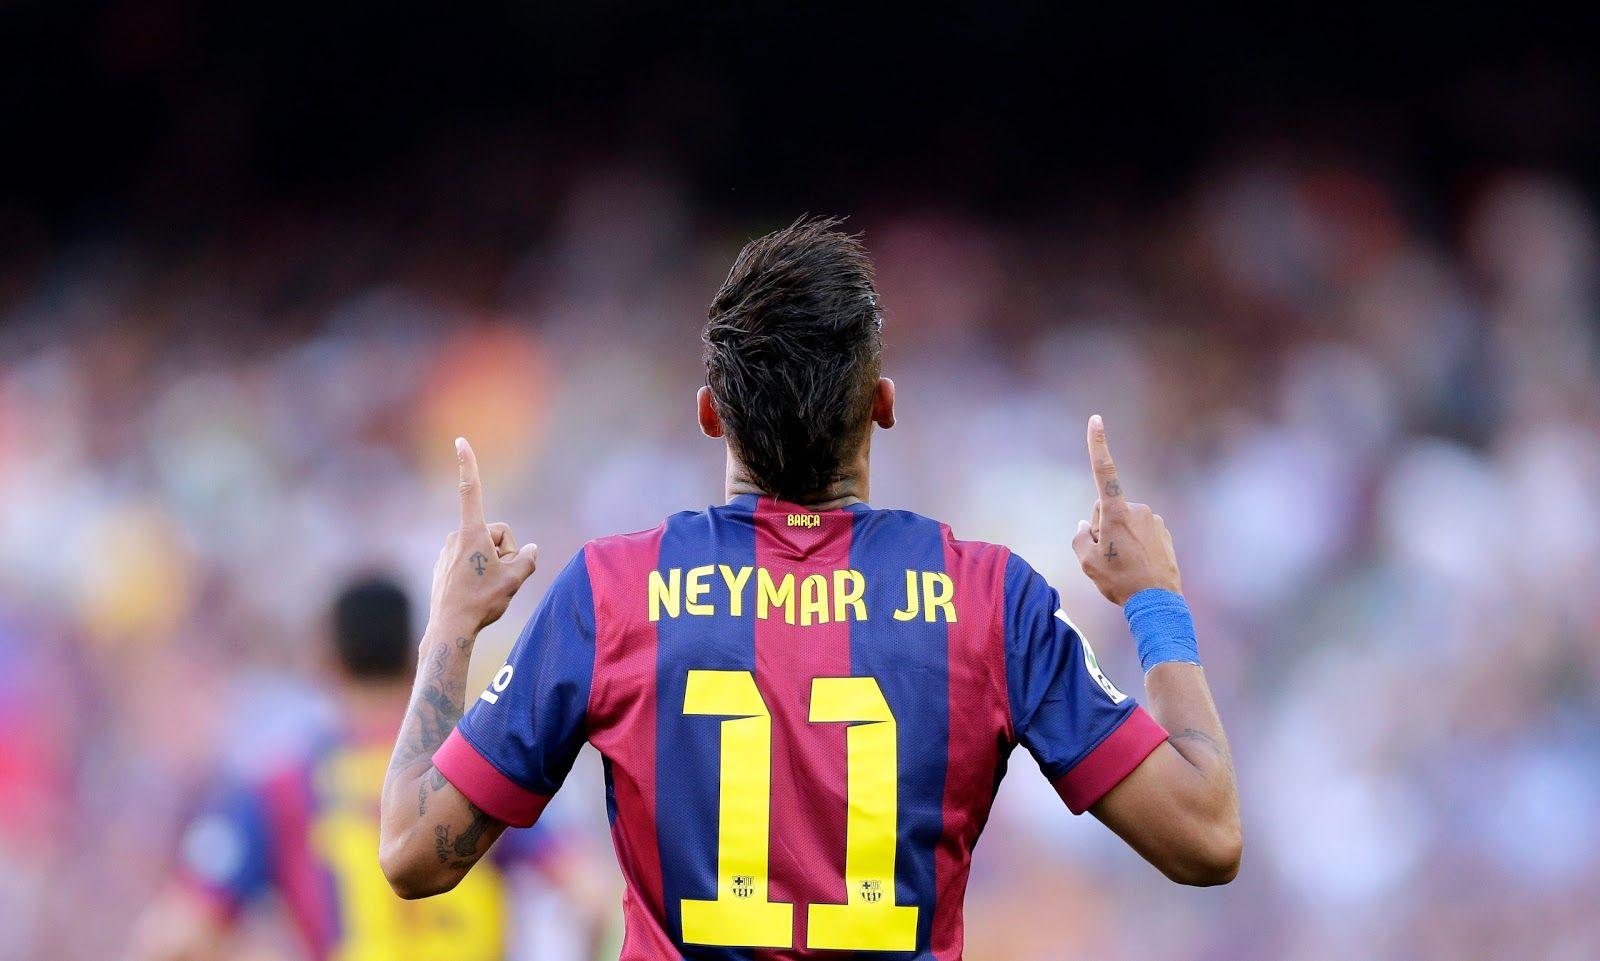 Neymar Jr. HD Wallpaper, Image & Picture Free Download 1000 HD